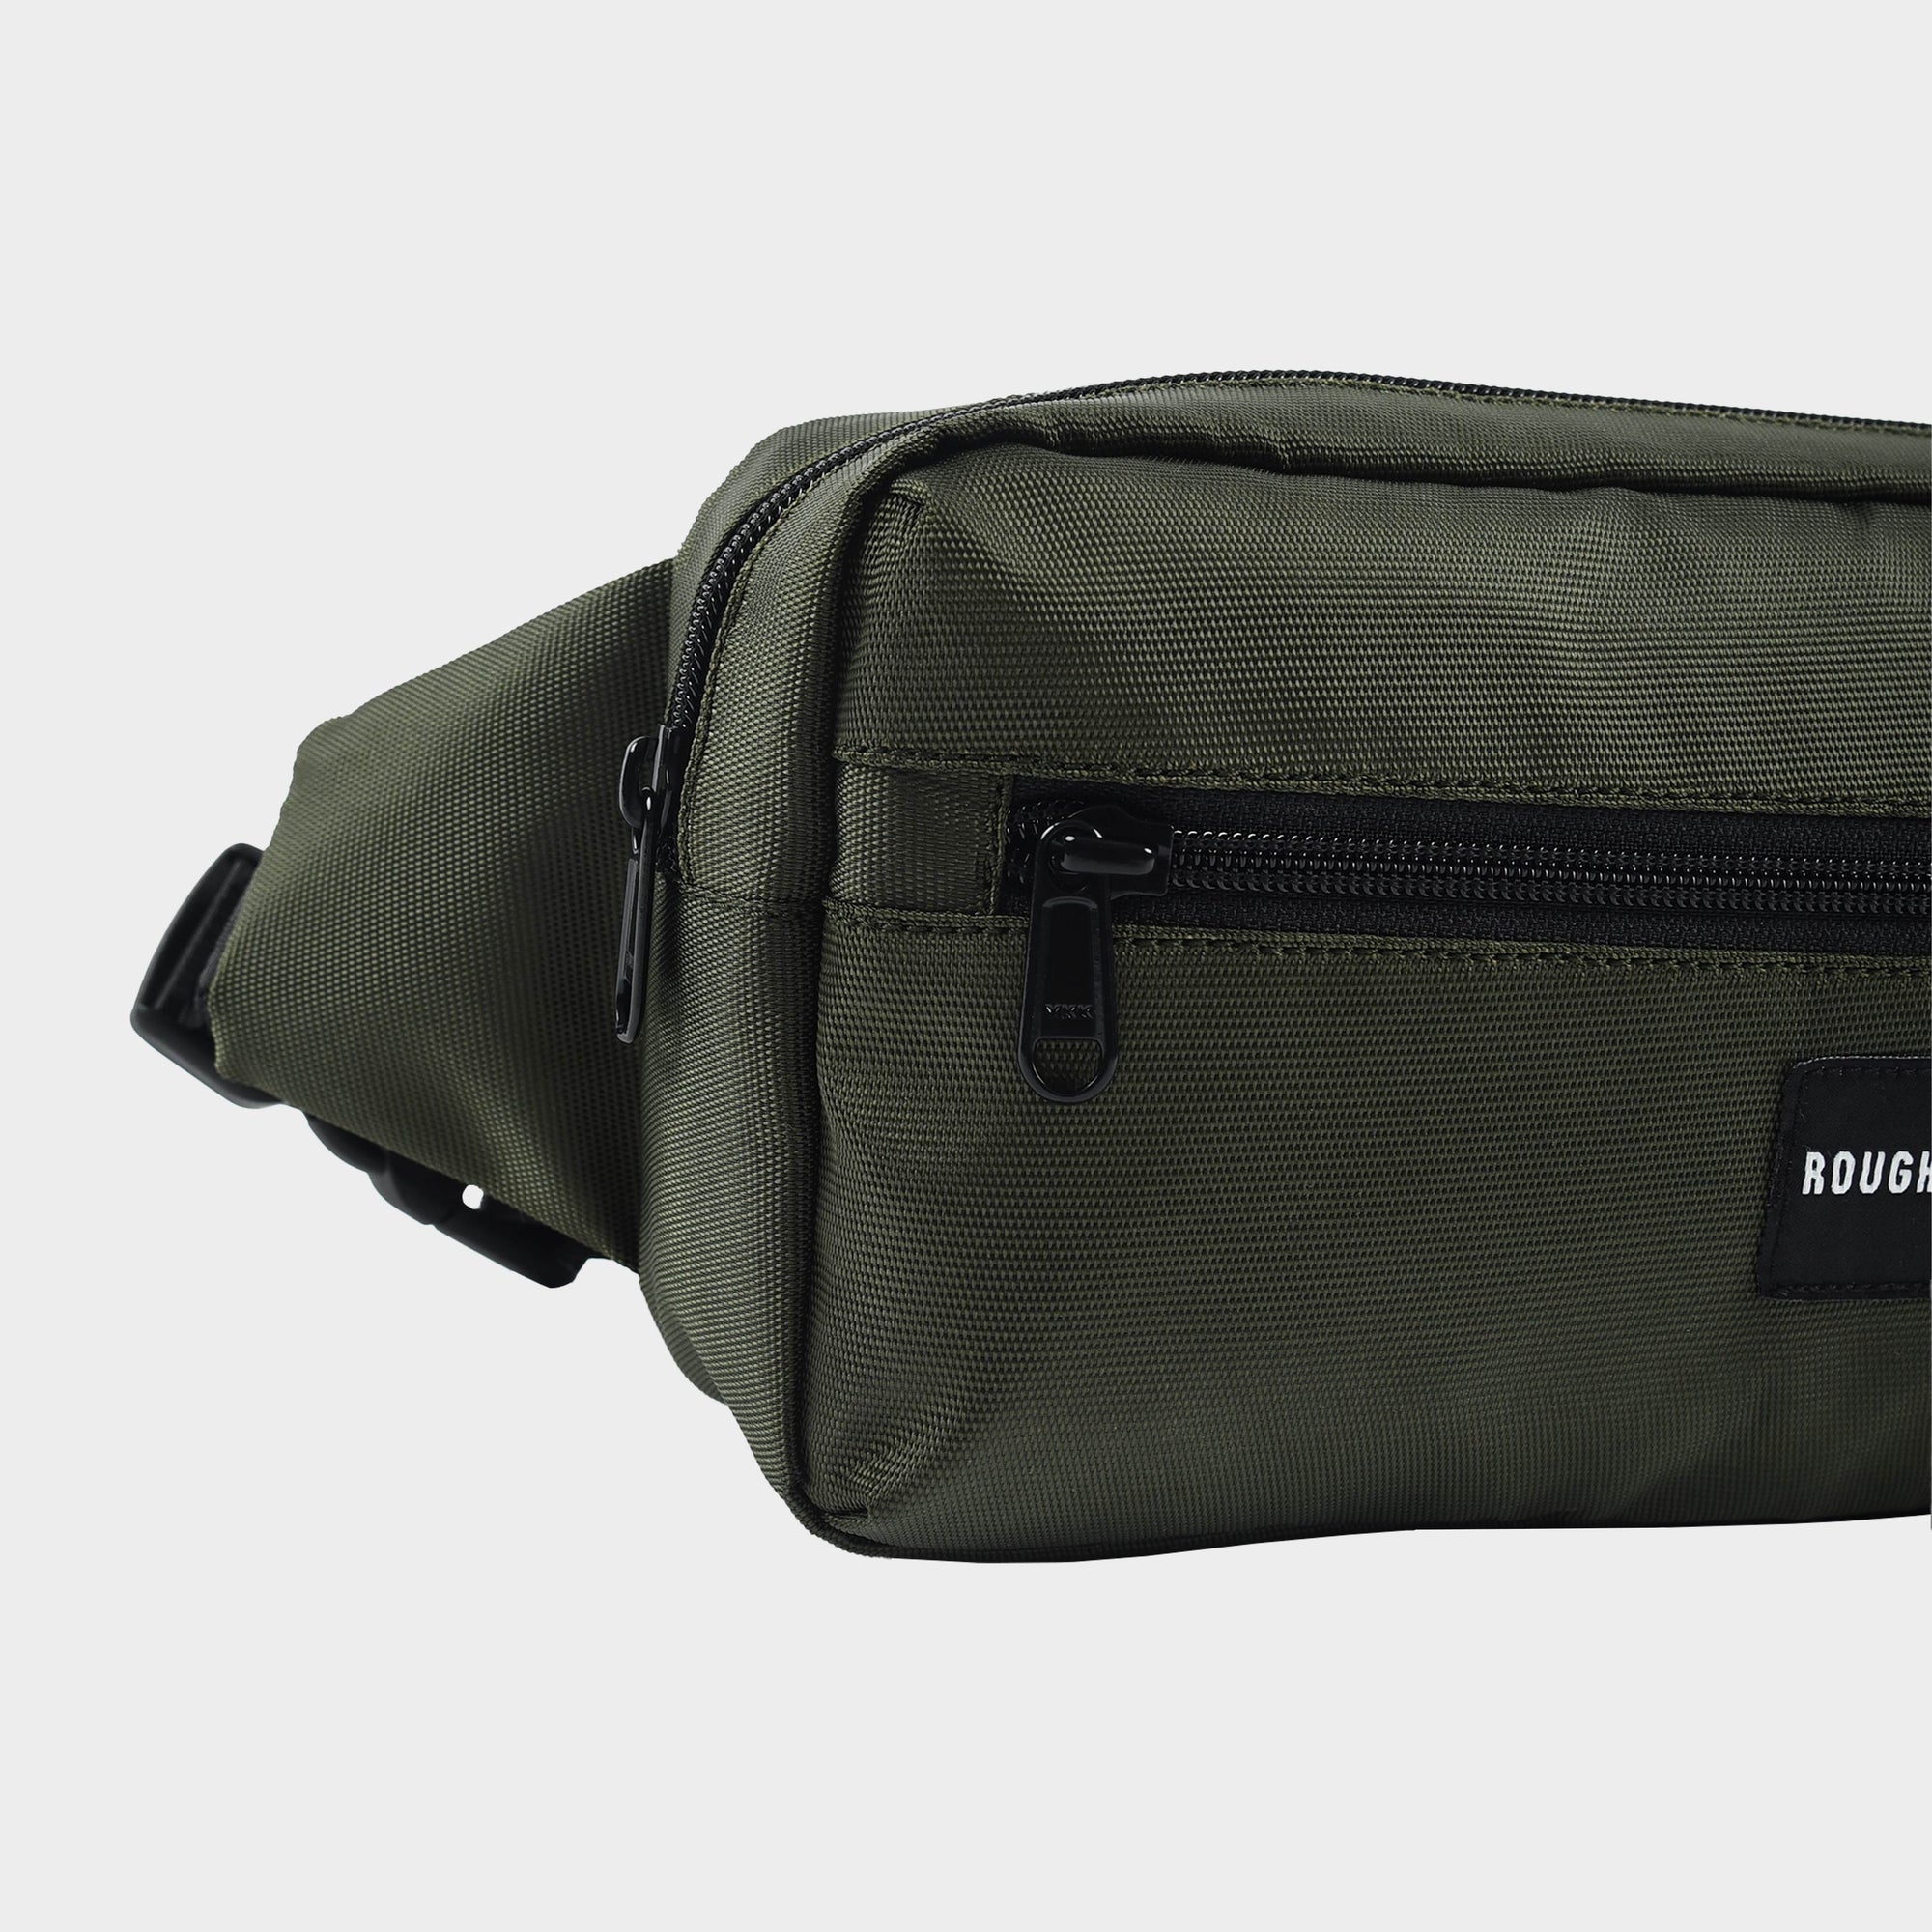 Roughneck WB032 Army Green Lancaster Waist Bag